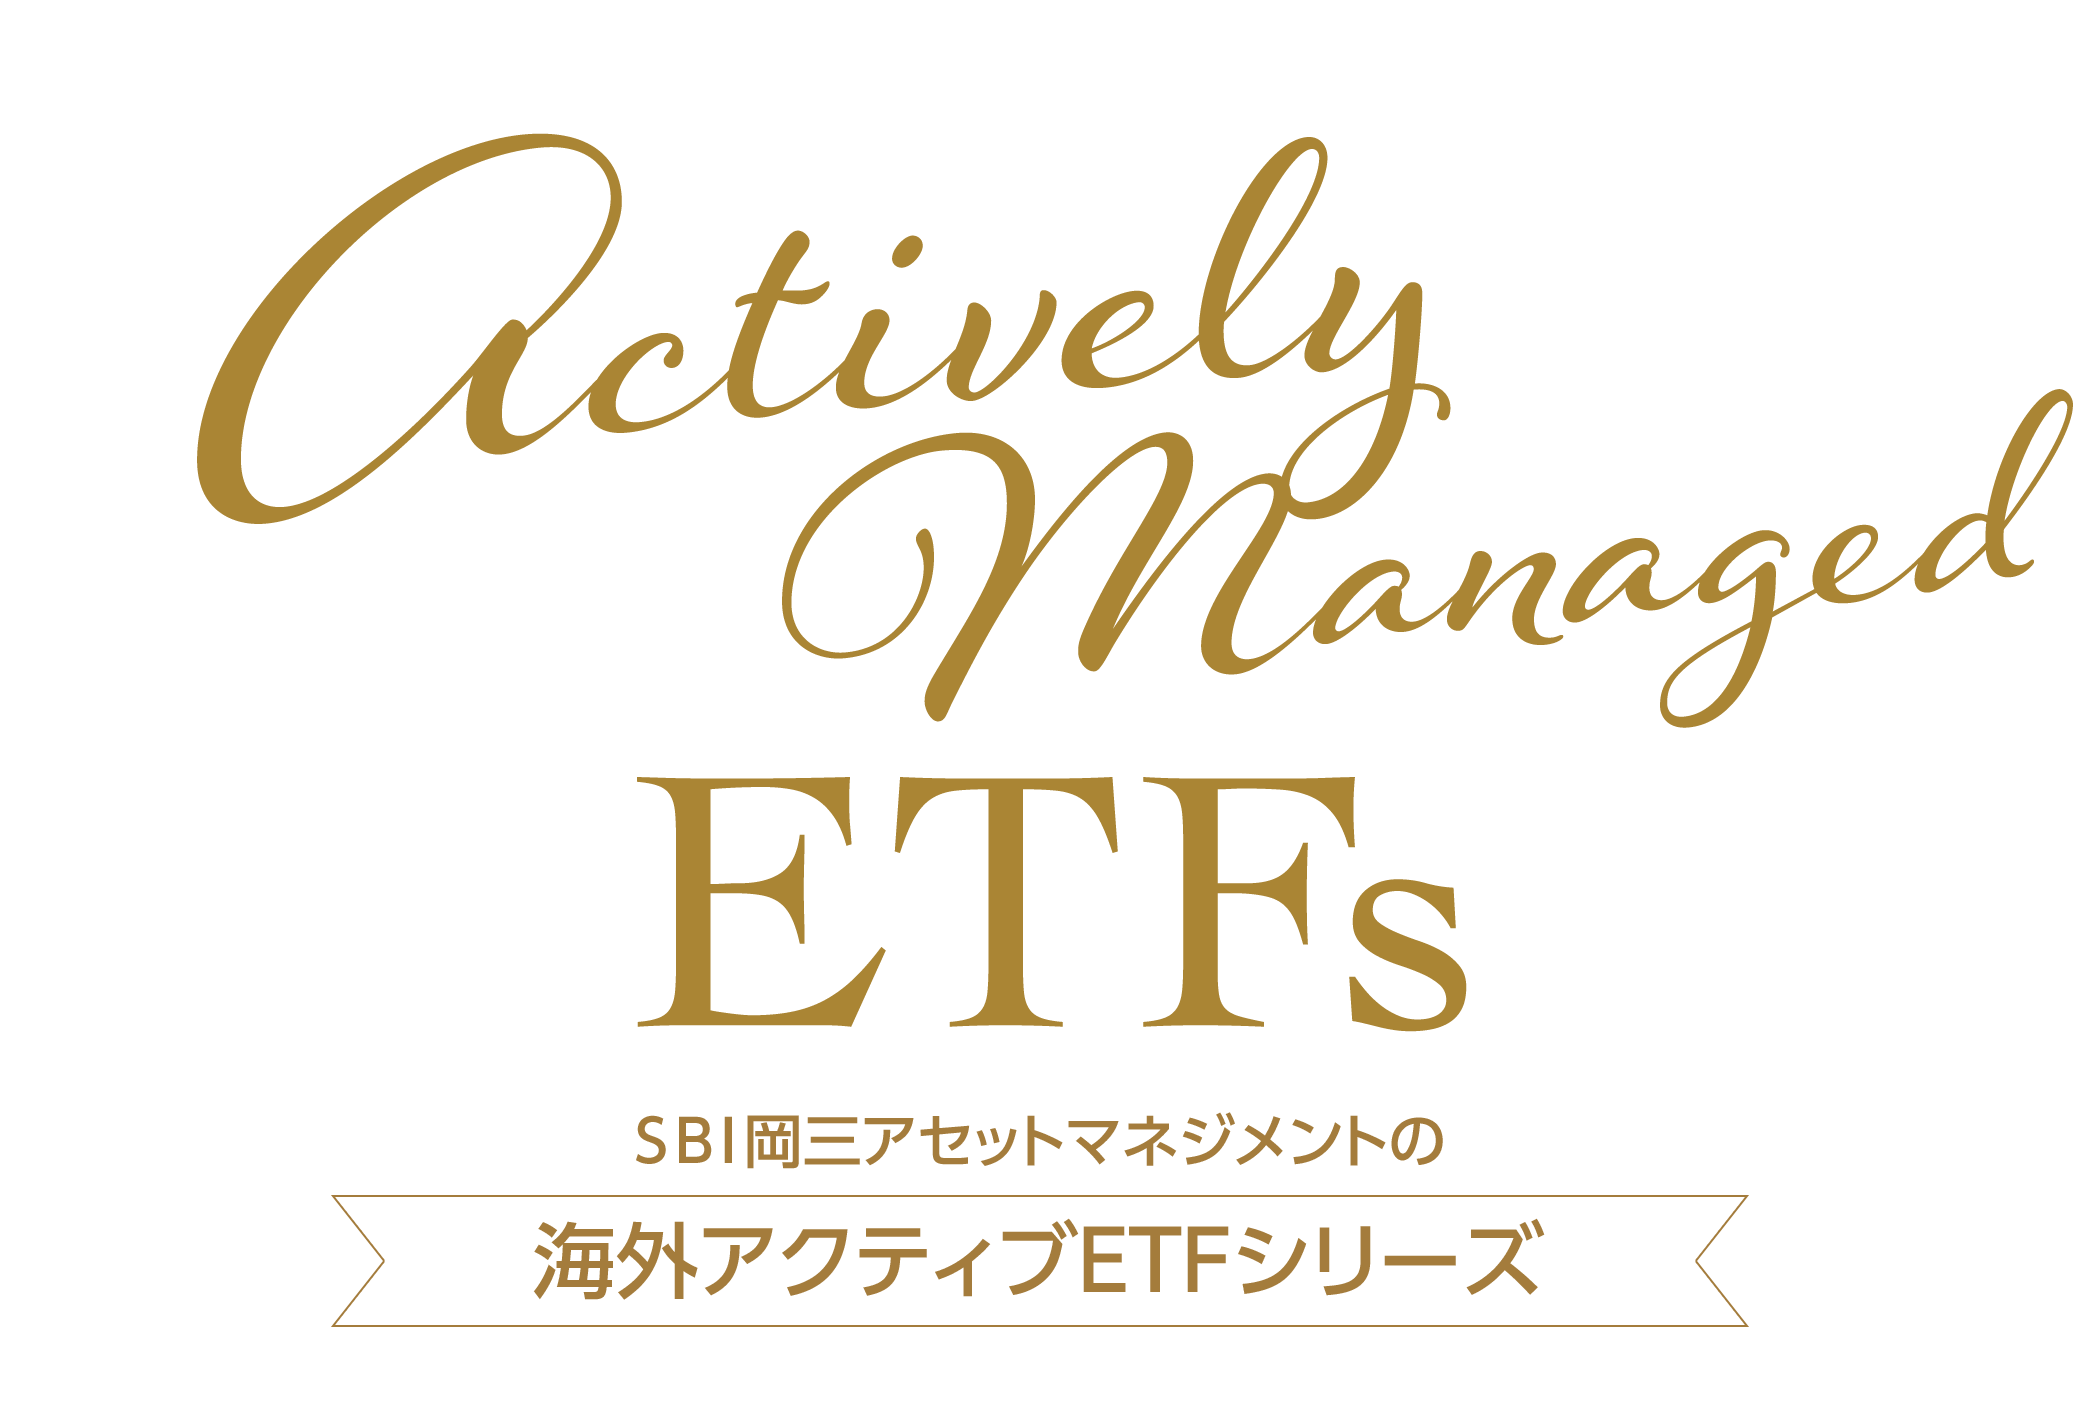 Actively Managed EFTs